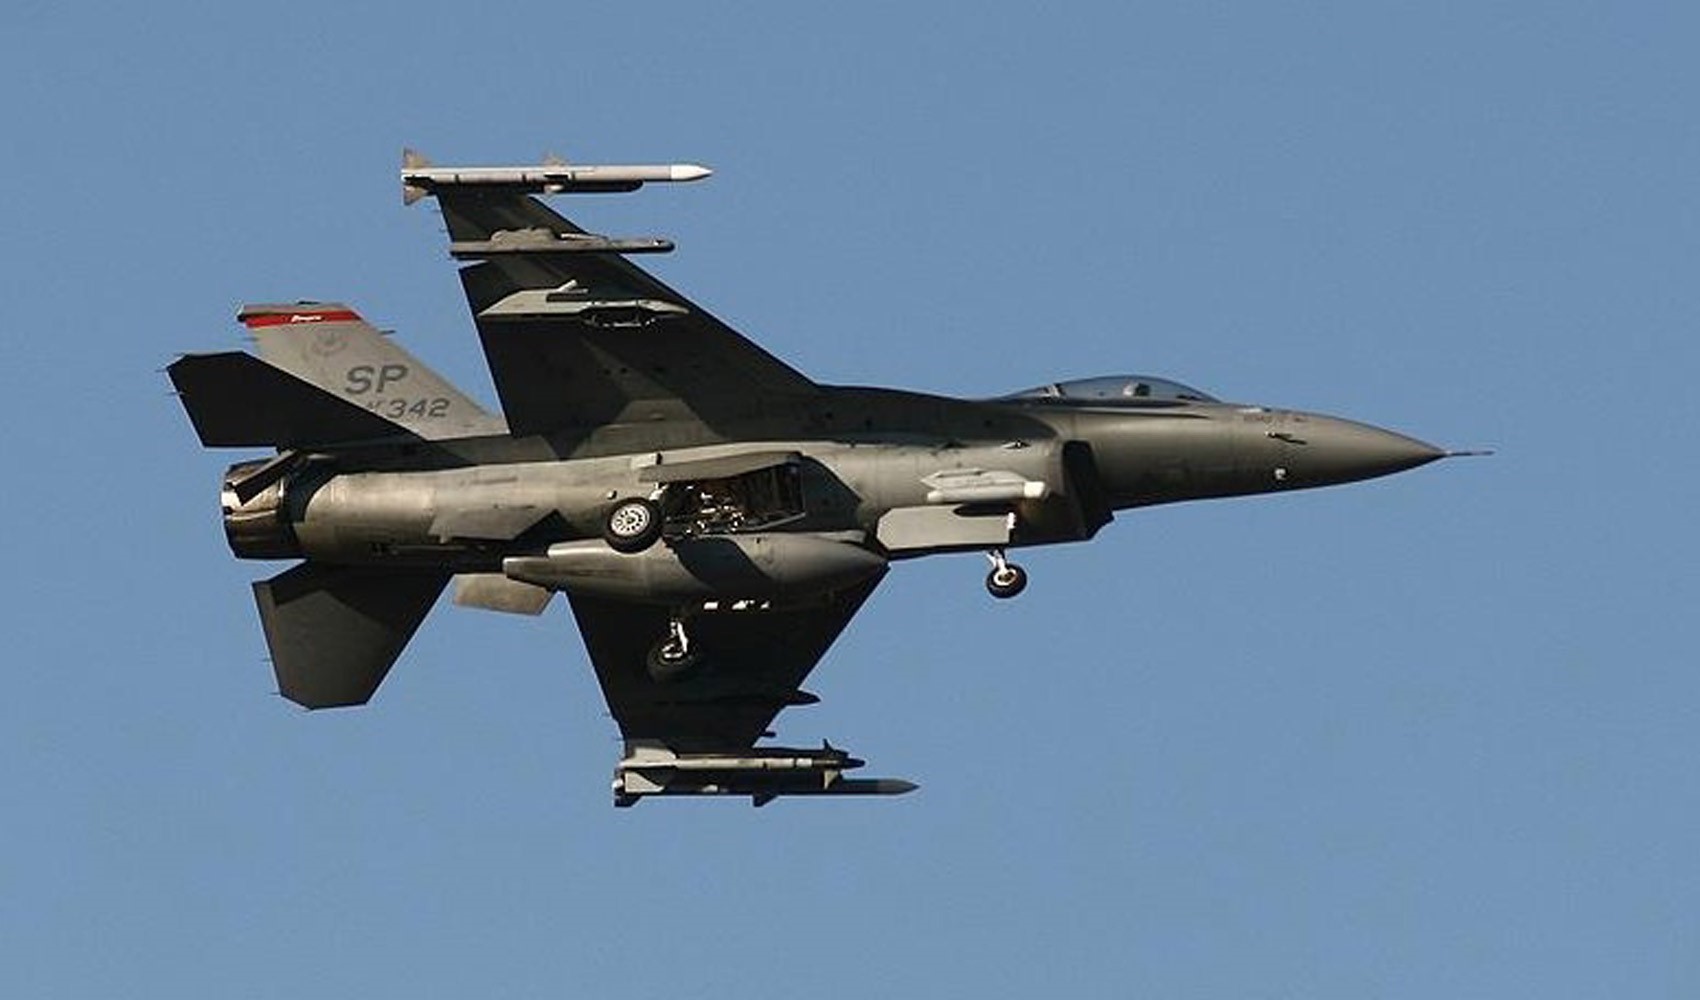 Singapur’da eğitim uçuşu sırasında F-16 savaş uçağı düştü